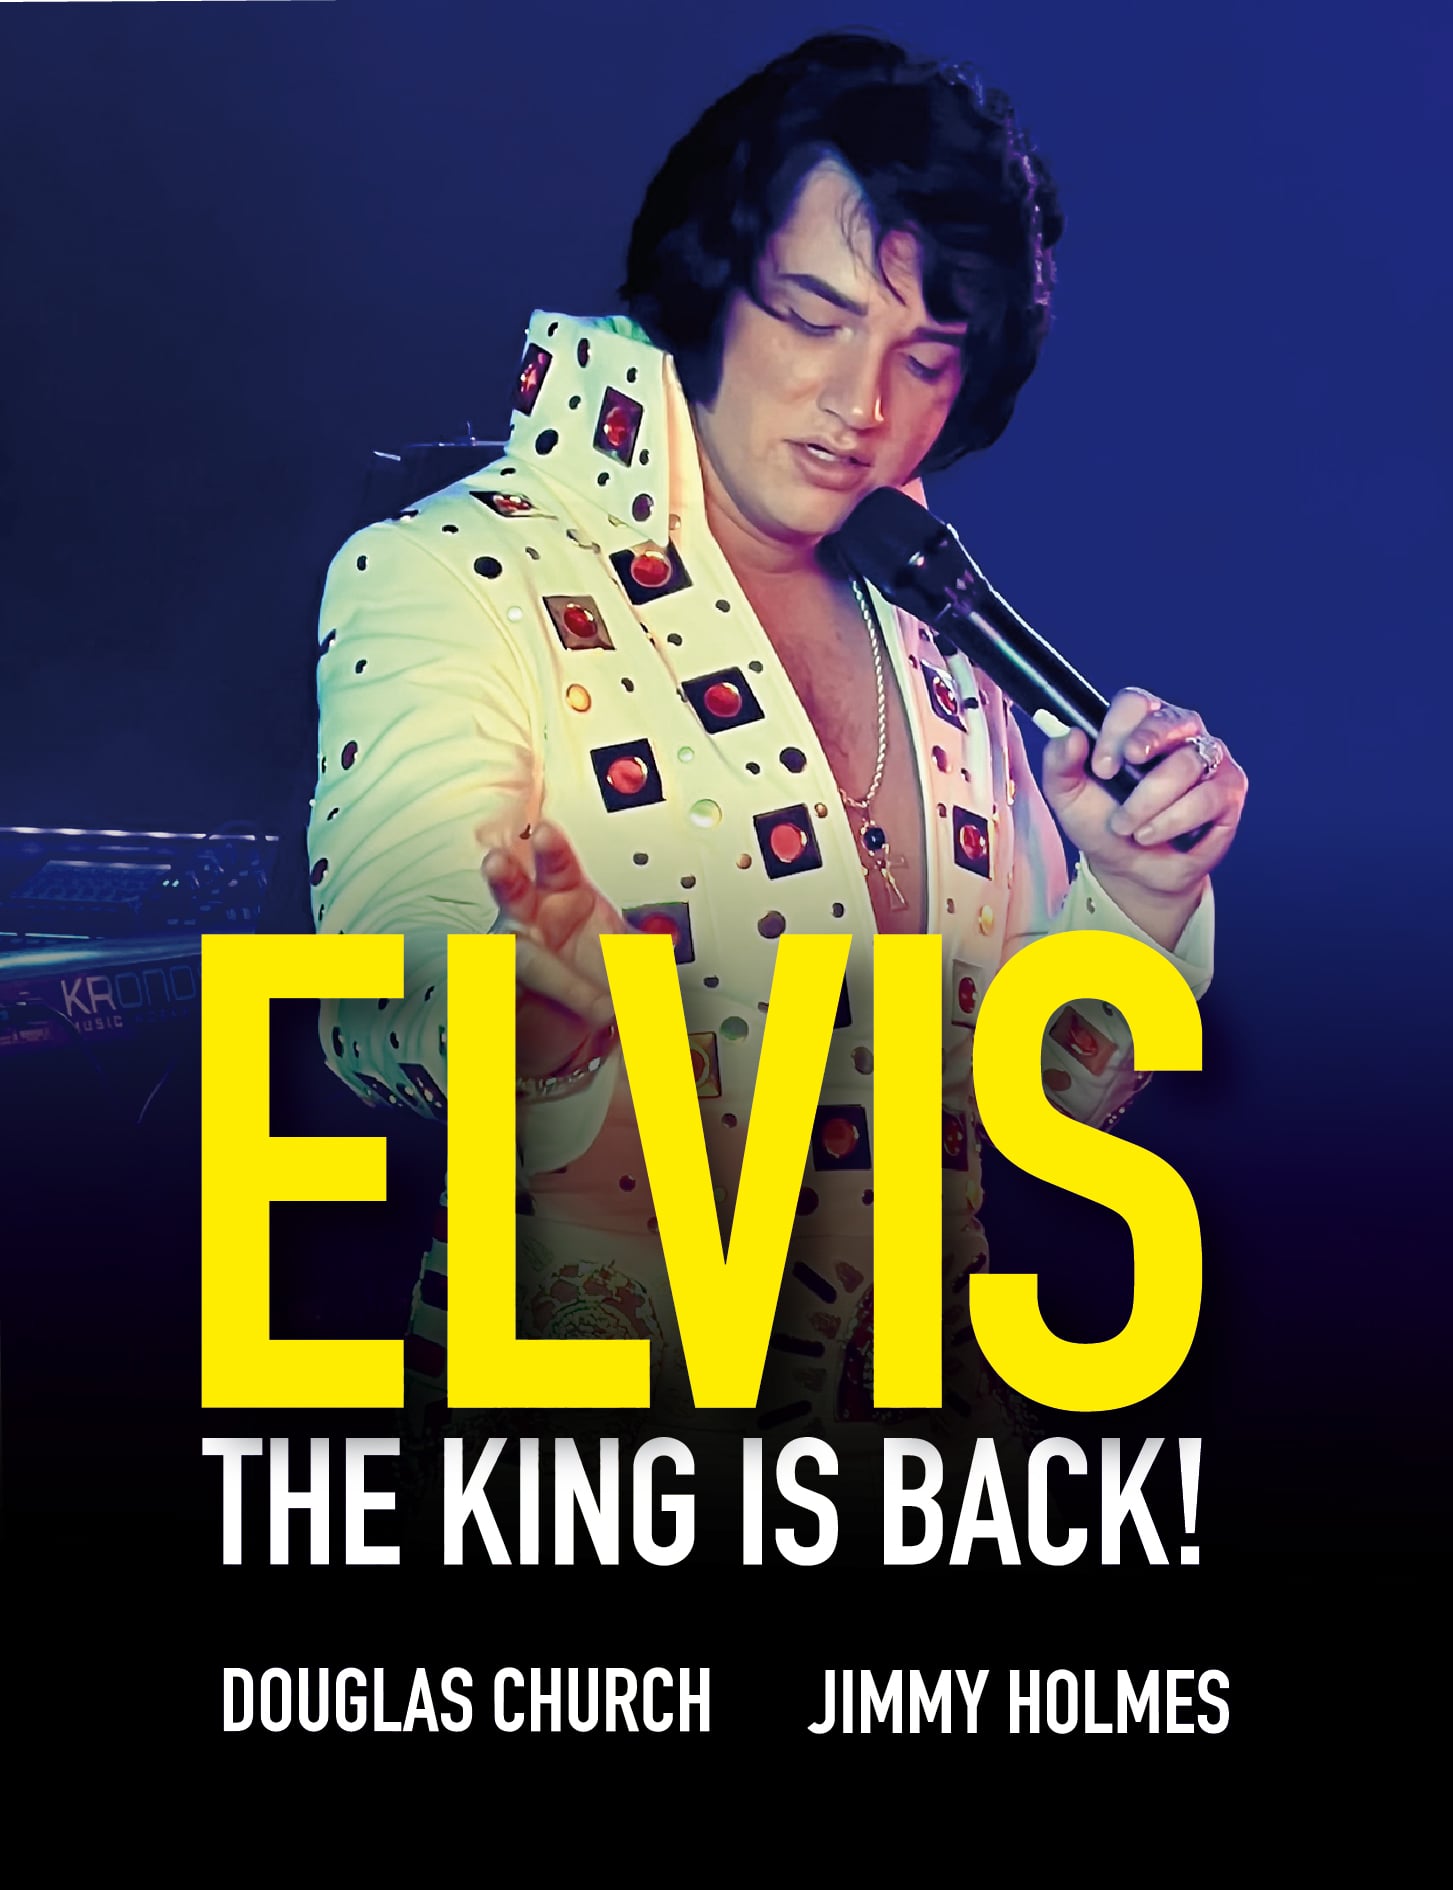 Elvis The King is back!